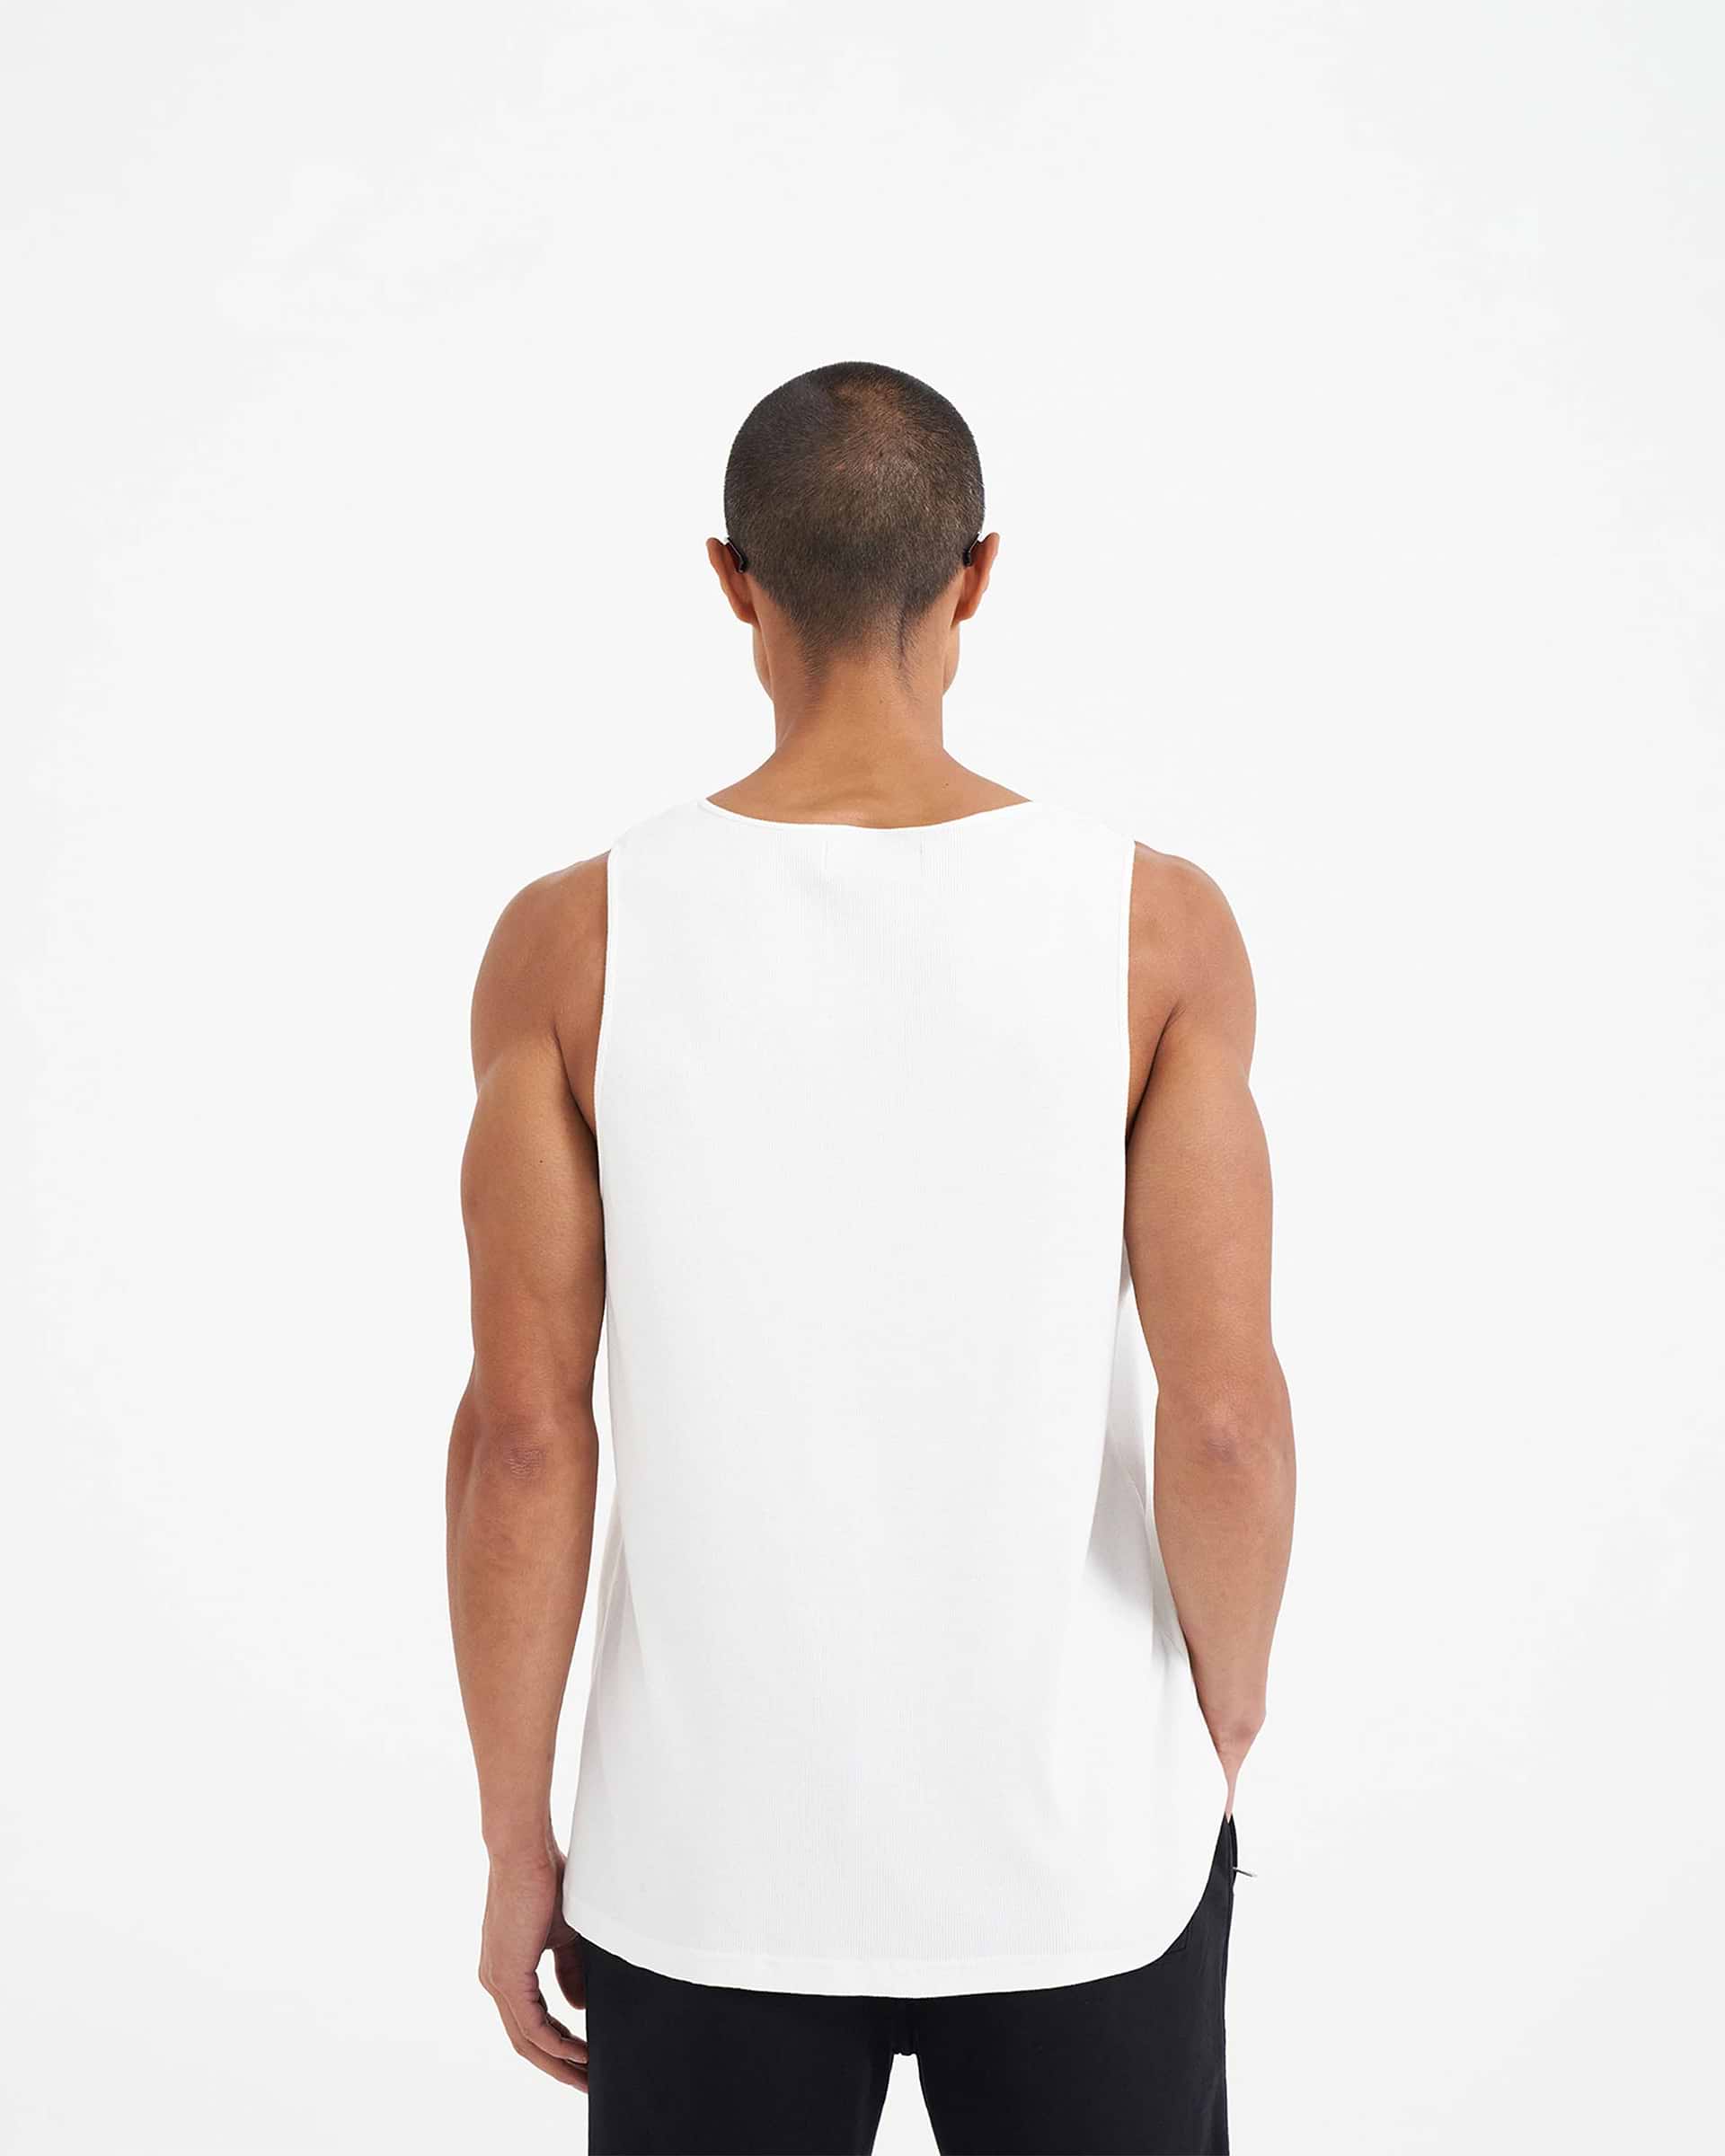 32 DEGREES Cool Tank Top Sleeveless T-Shirt Mens XL or XXL